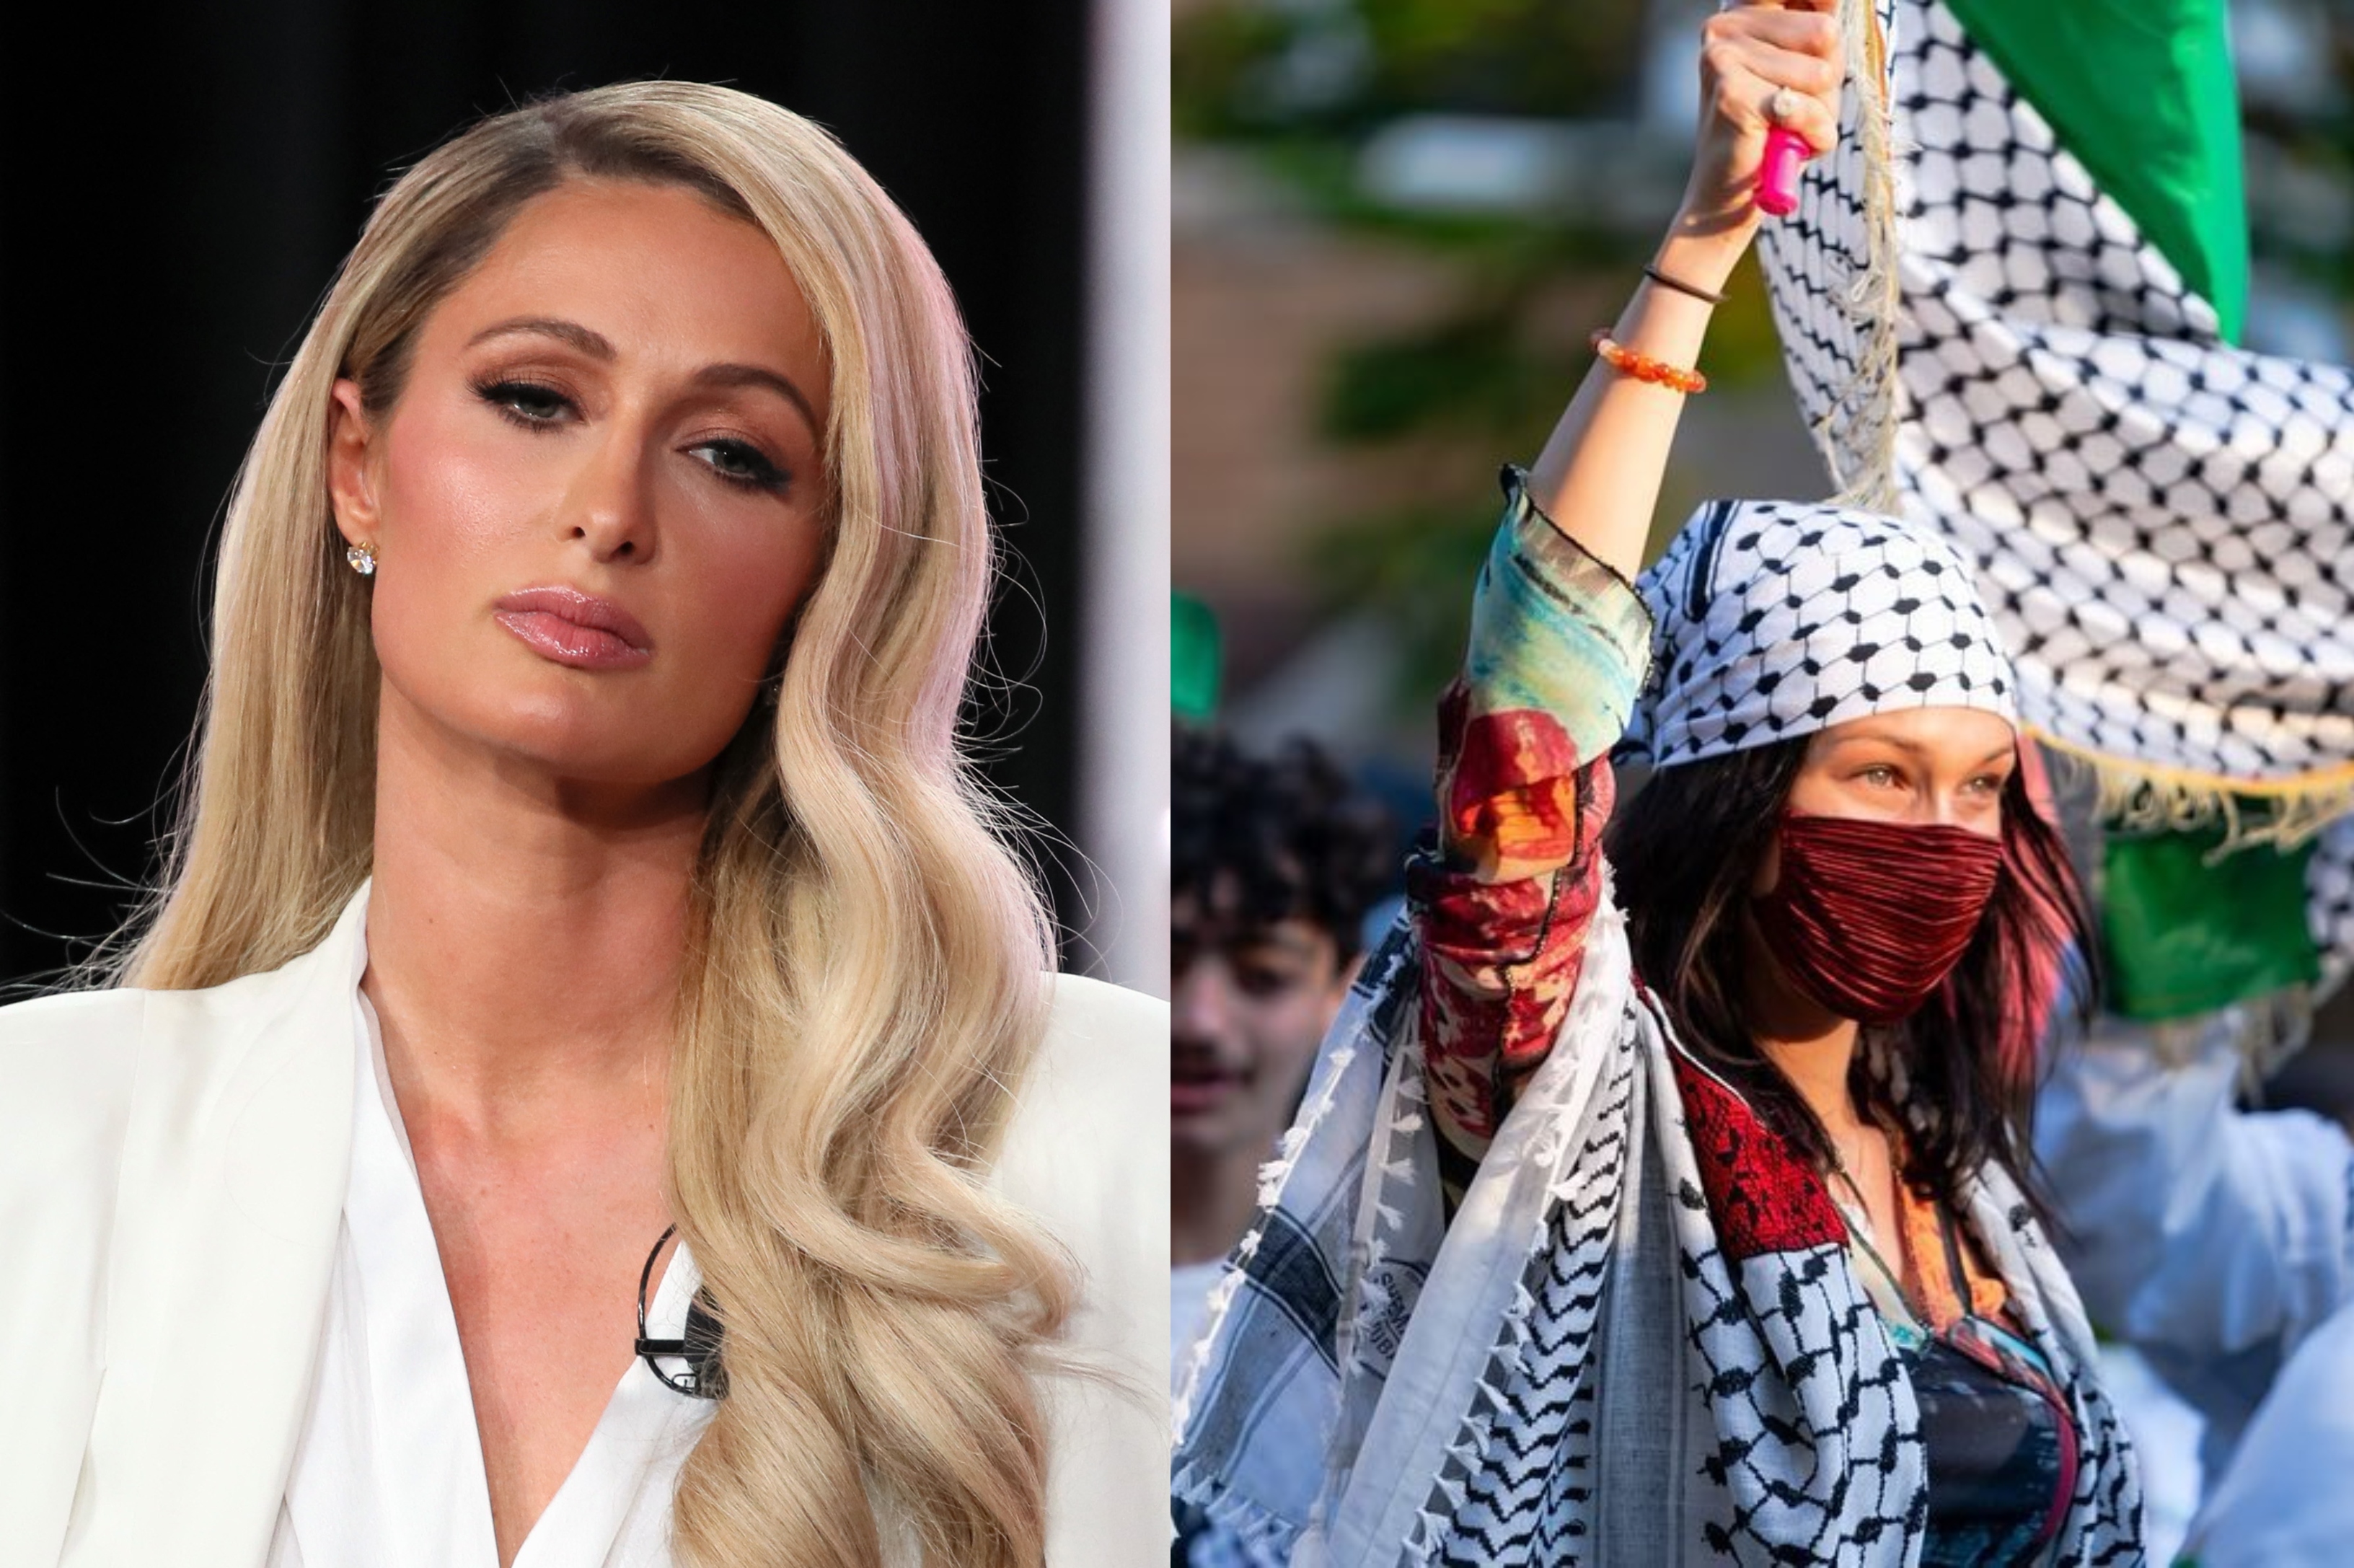 U.S. Jewish leader slams Louis Vuitton for hiring 'antisemitic' Bella Hadid